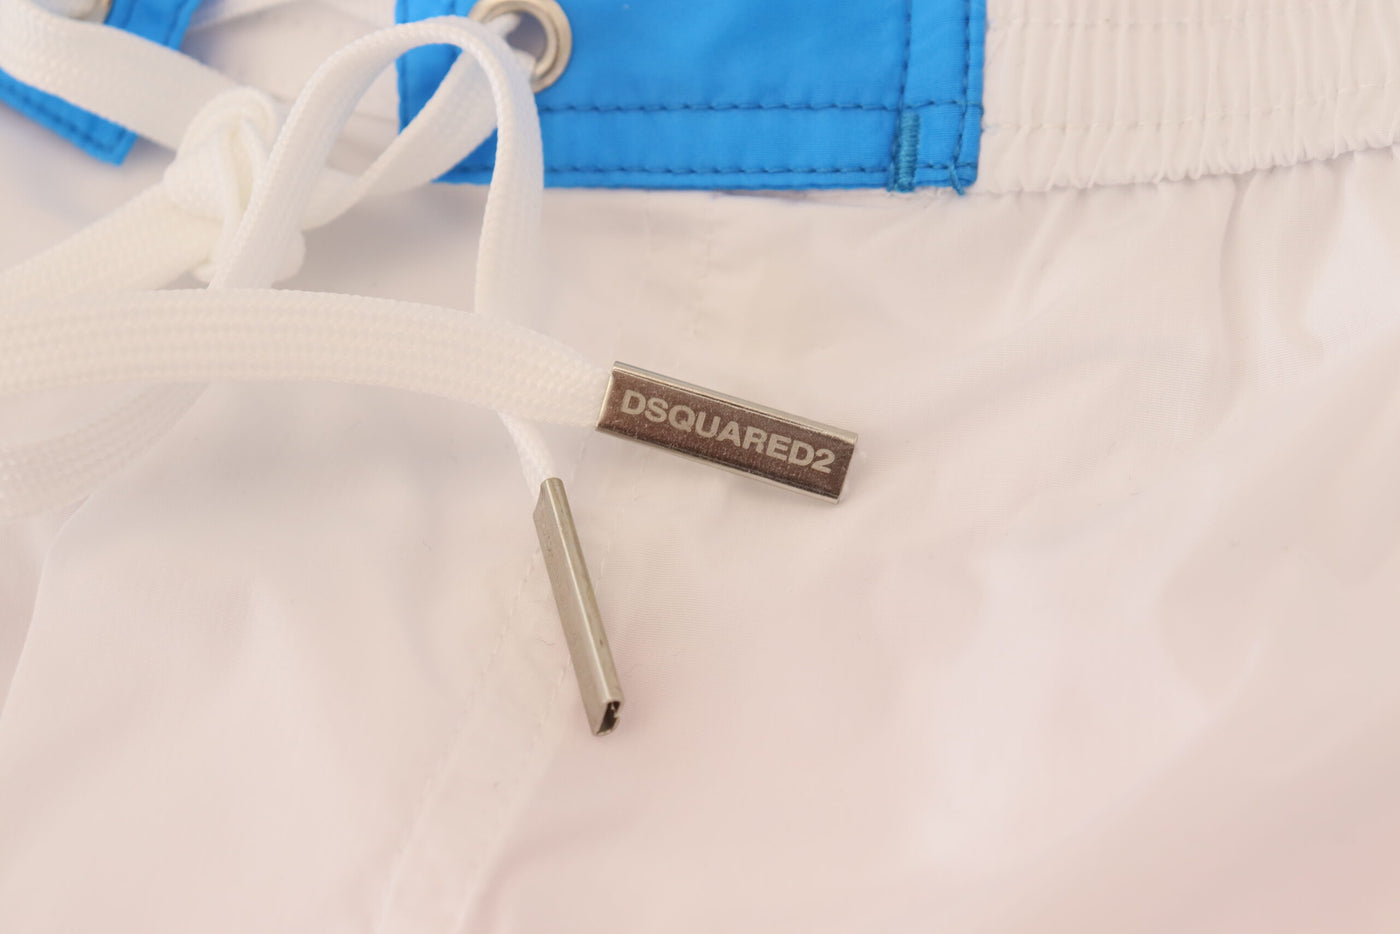 Dsquared² White Pink Logo Print Men Beachwear Shorts Swimwear